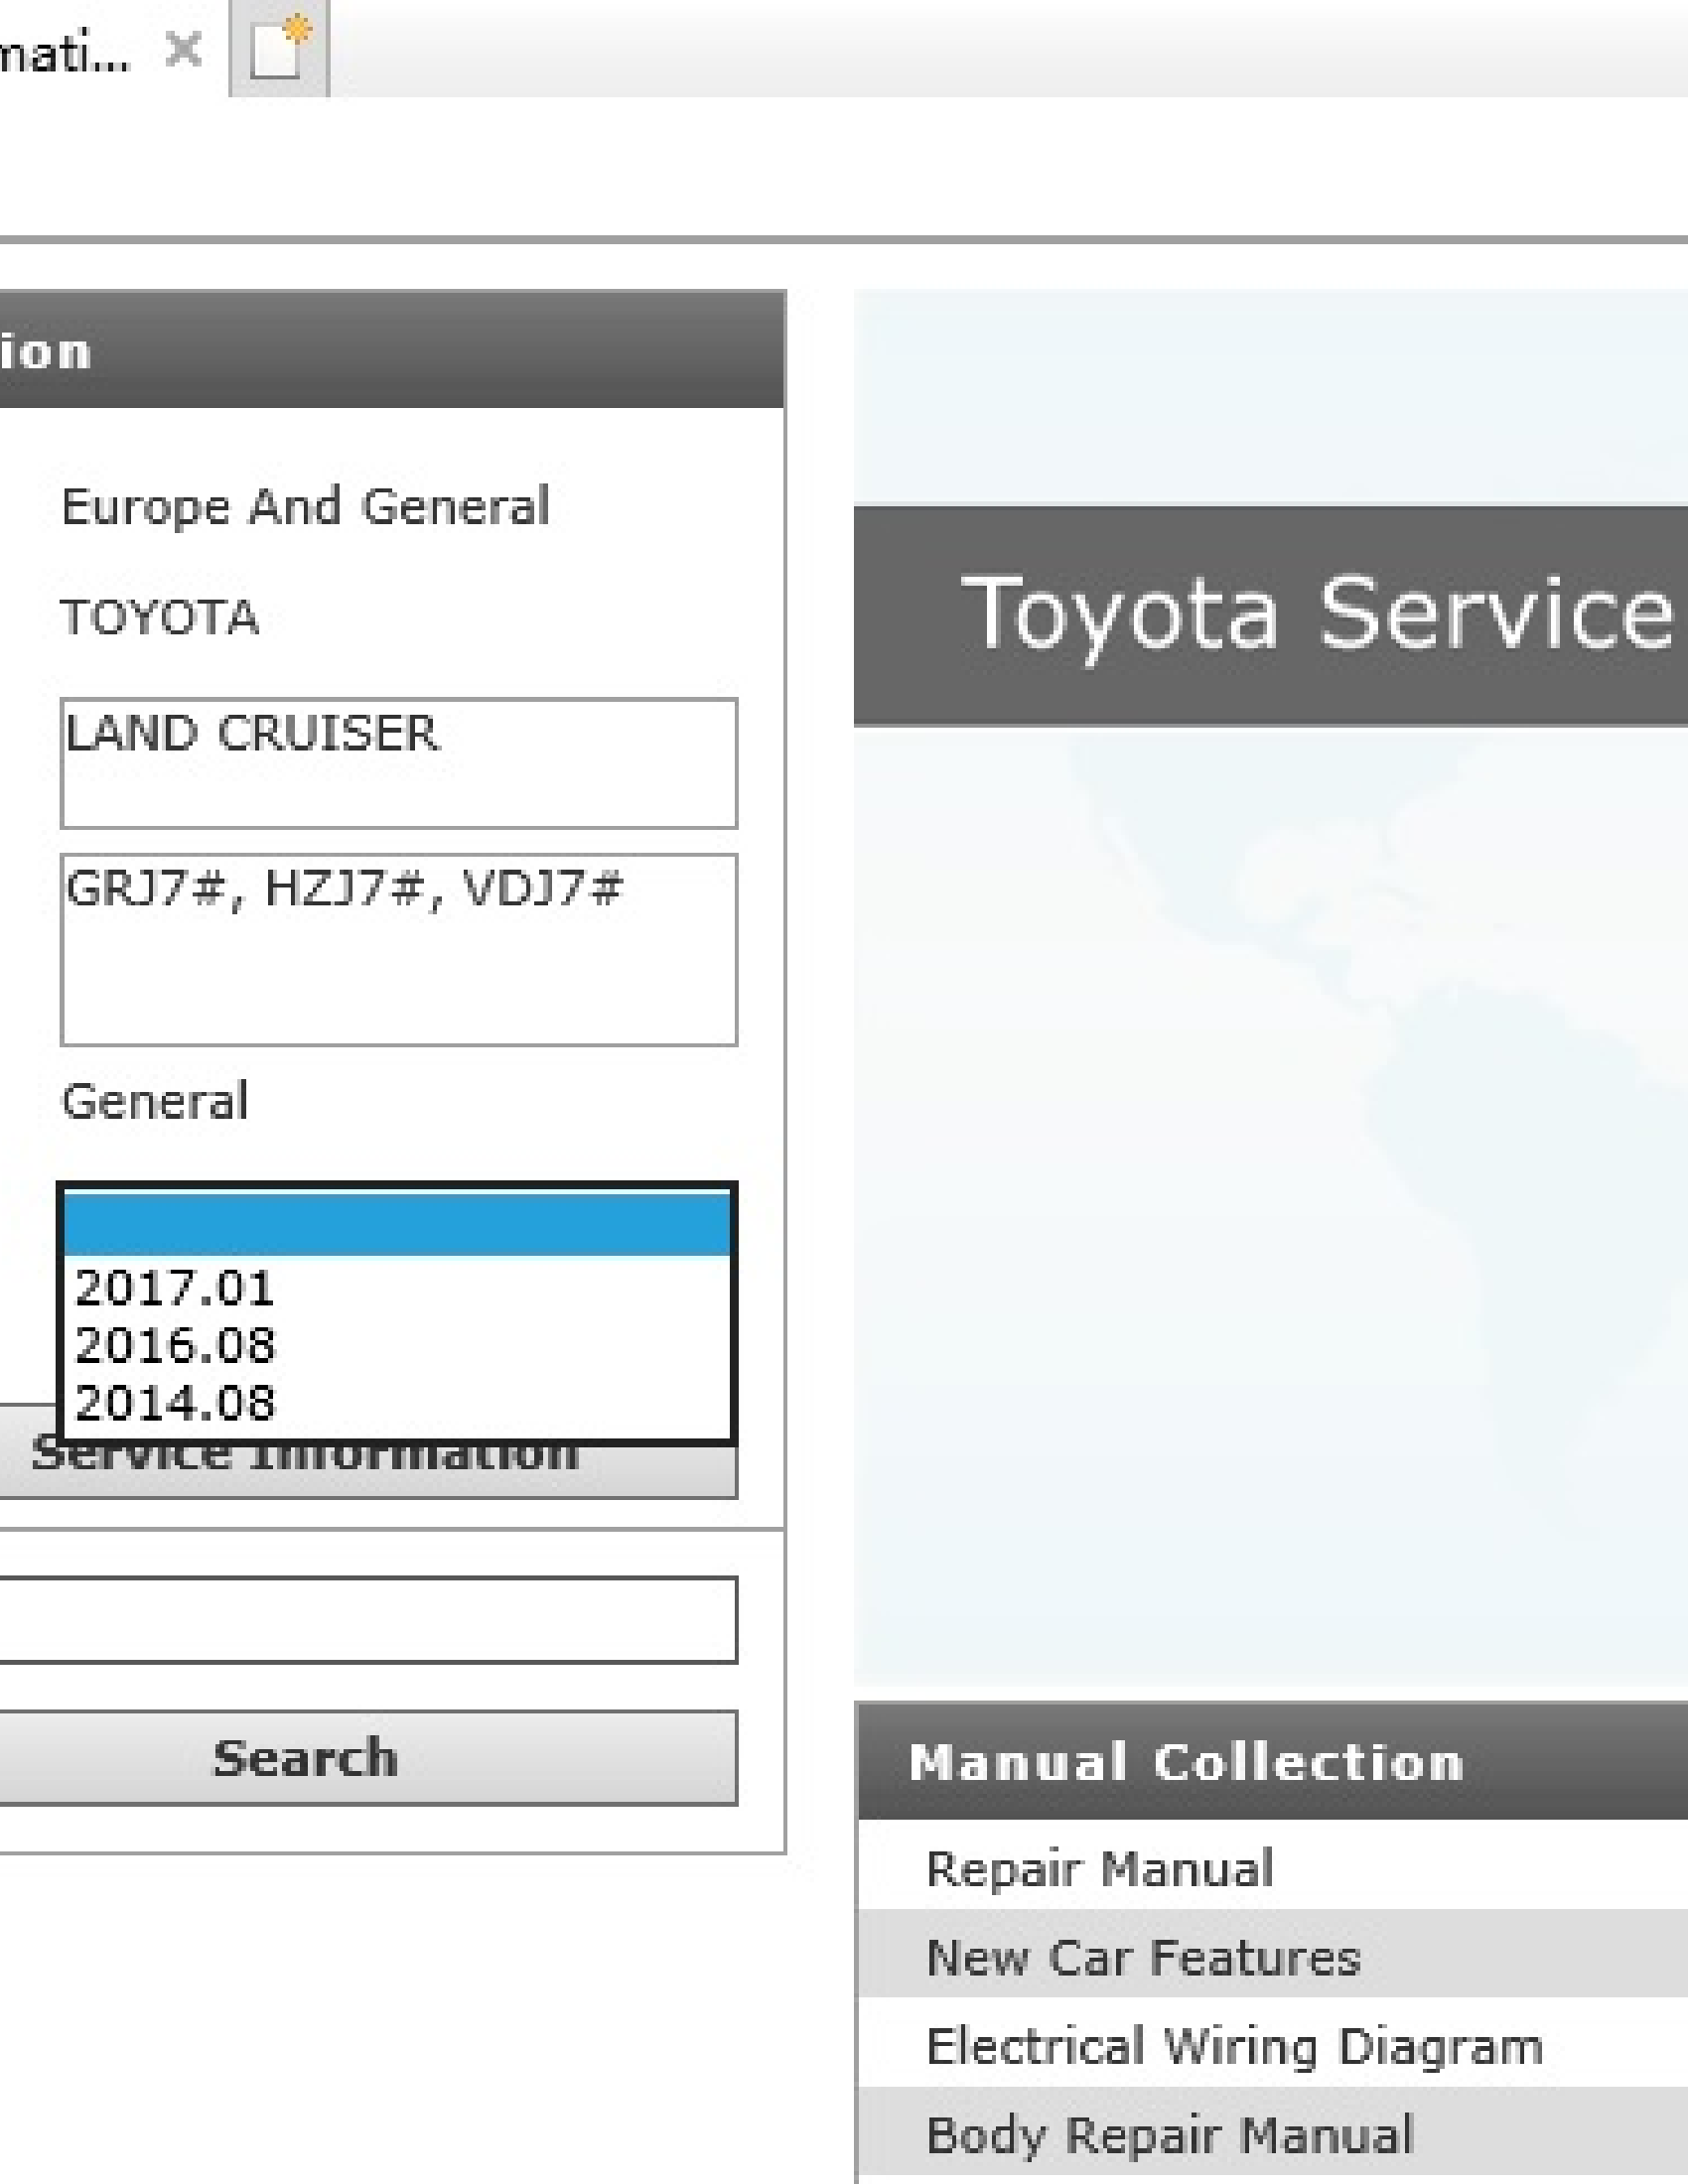 Toyota (GRJ7# LAND CRUISER manual